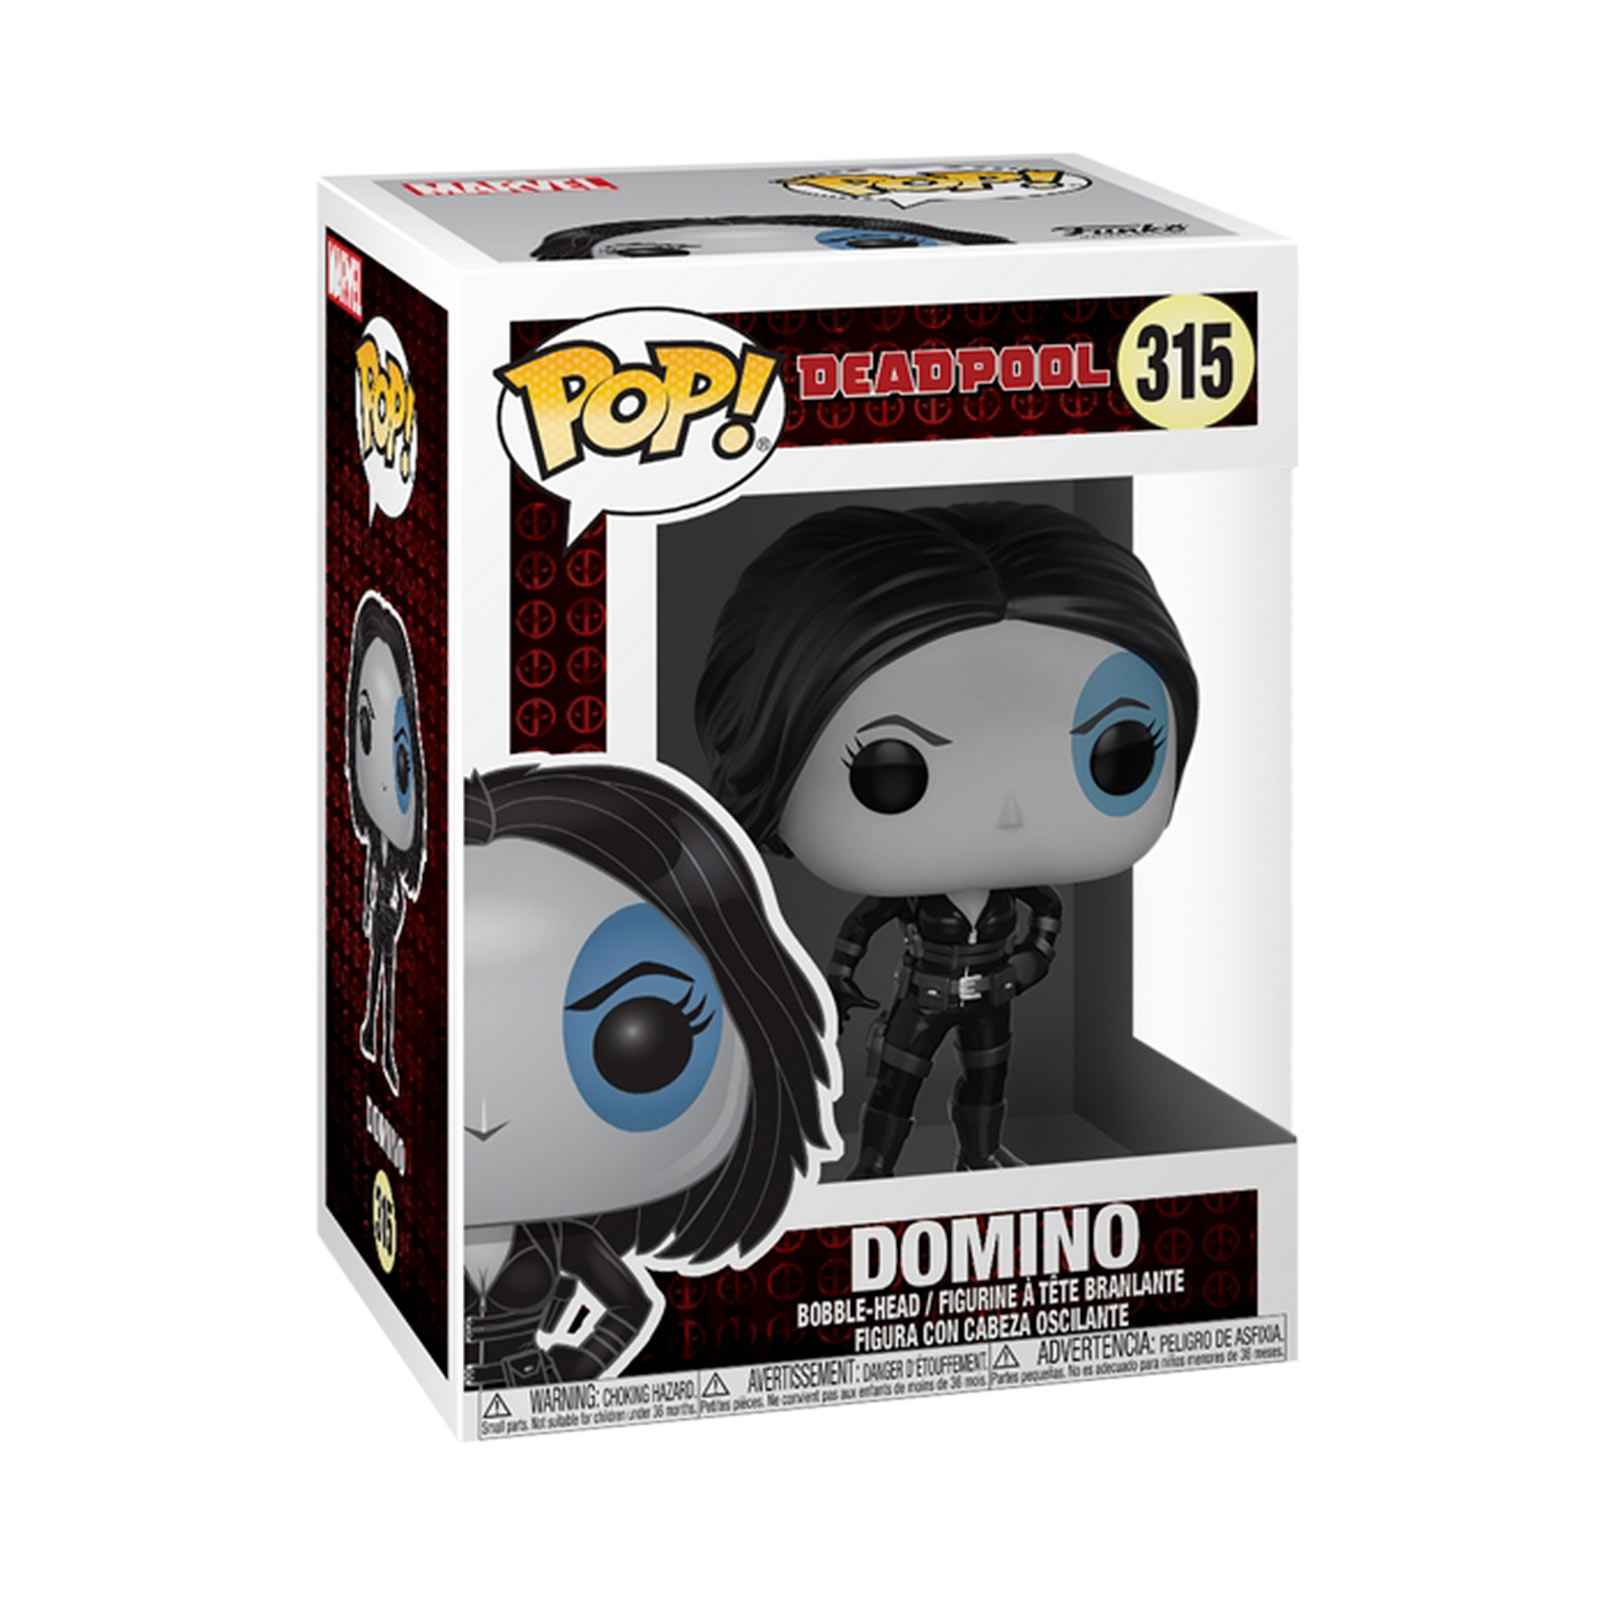 Deadpool - Domino Funko Pop Bobblehead Figure